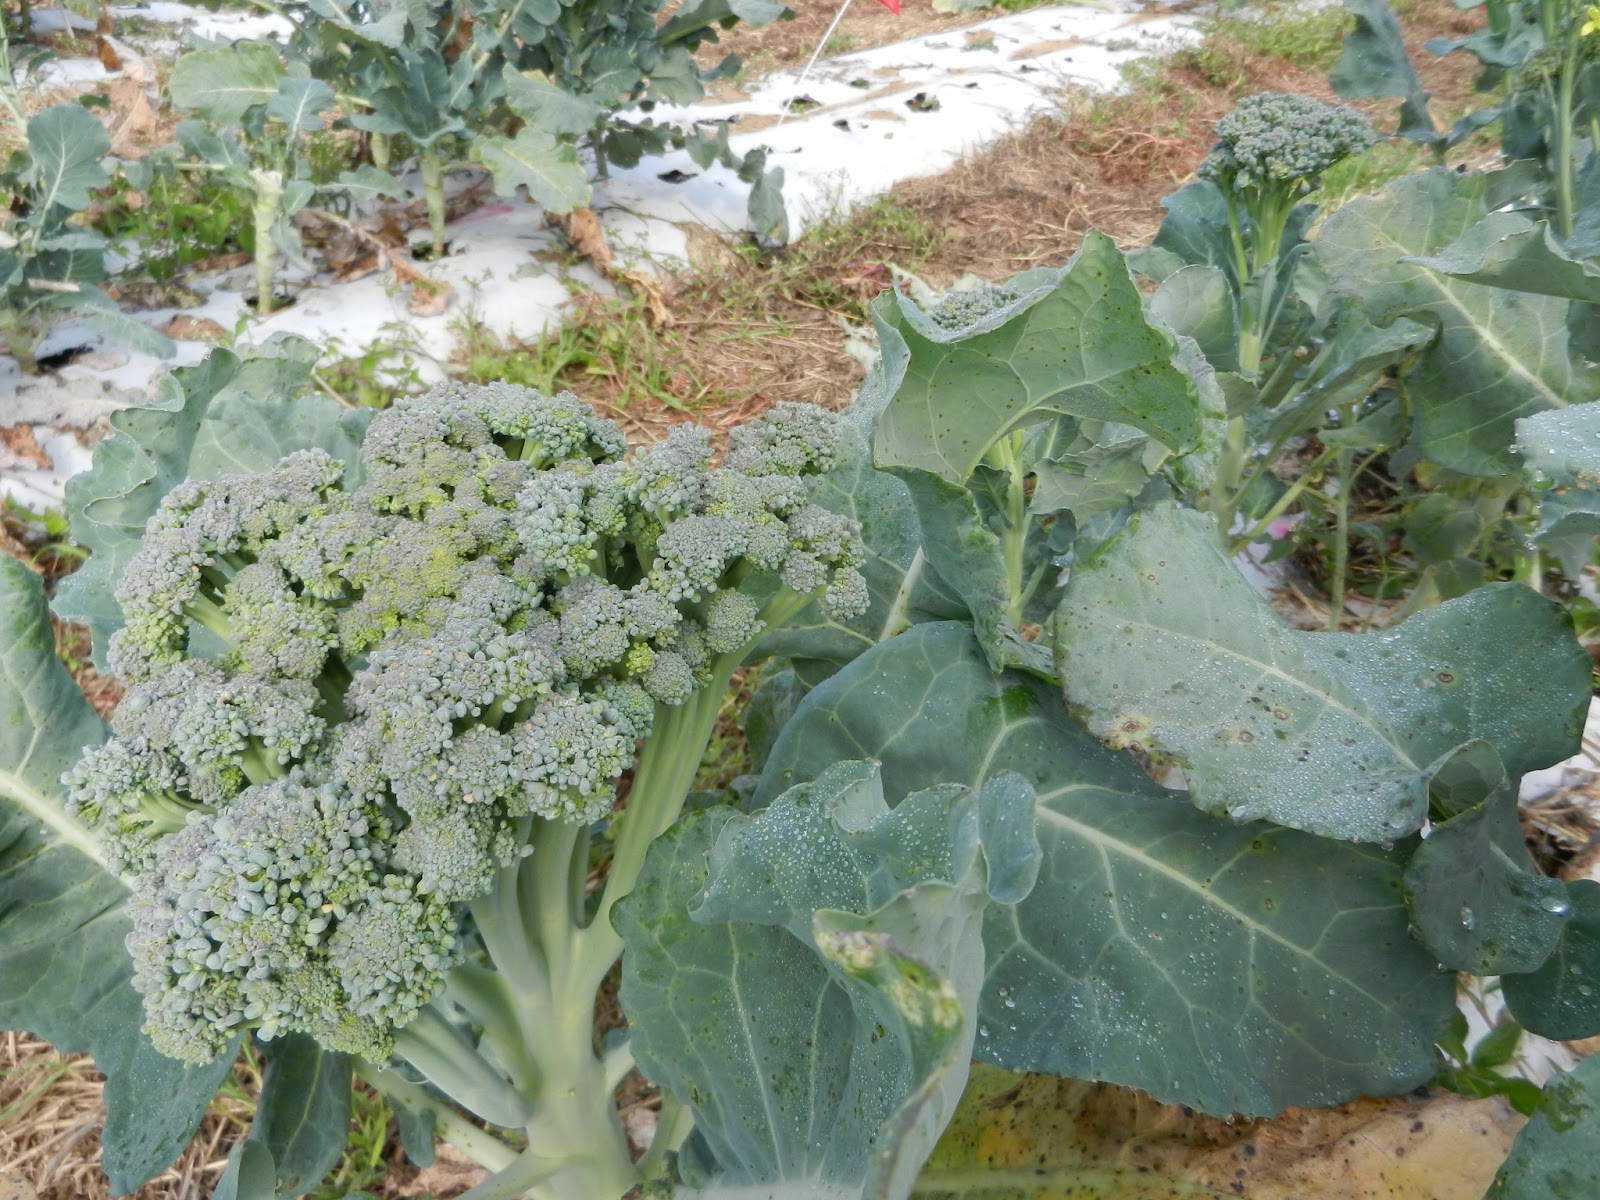 Waltham 29 broccoli grown in 2012